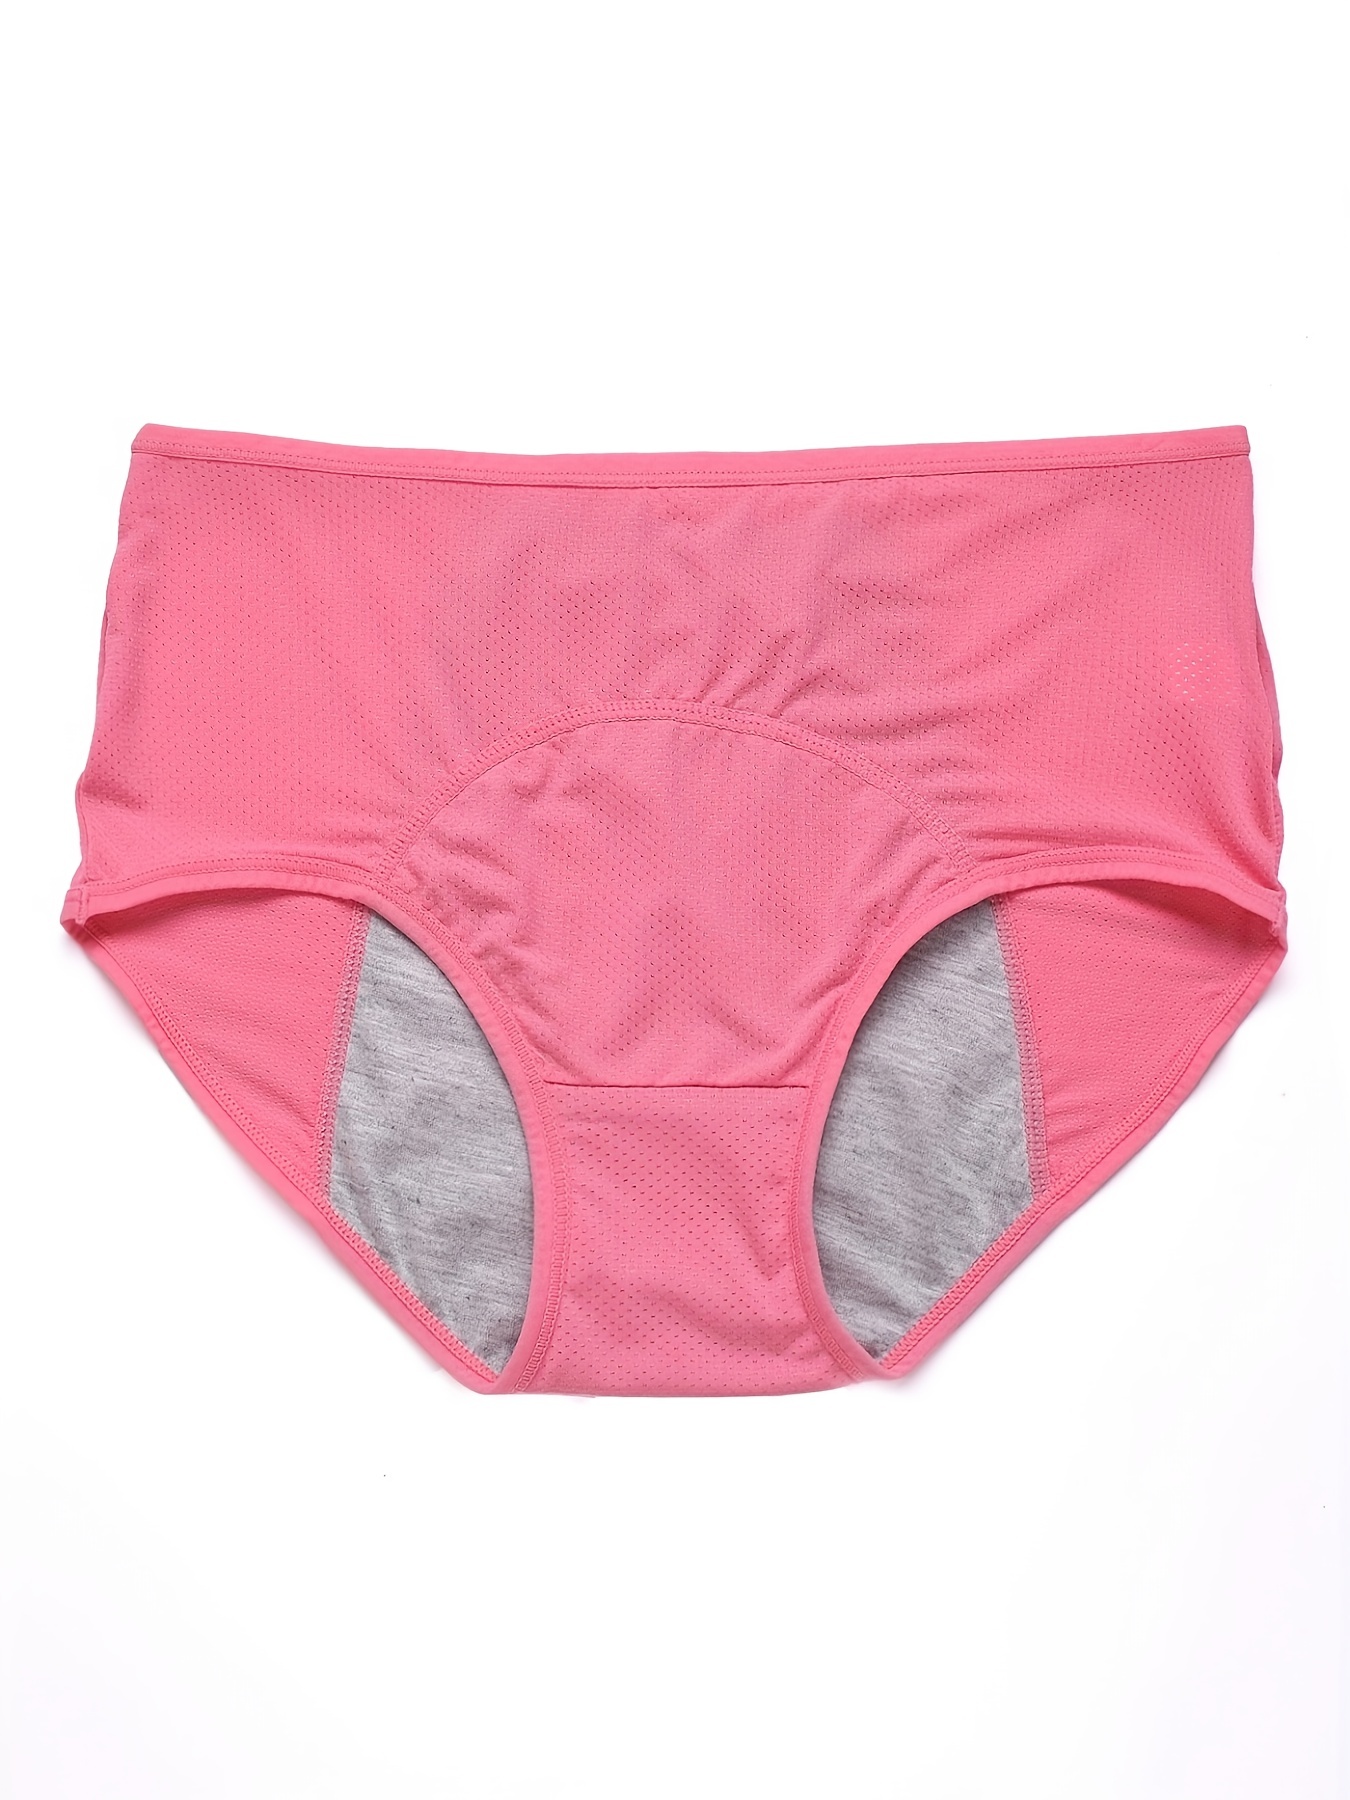 Plus Size High Waist Leak Proof Panties Women's Soft Breathable Briefs  Underwear